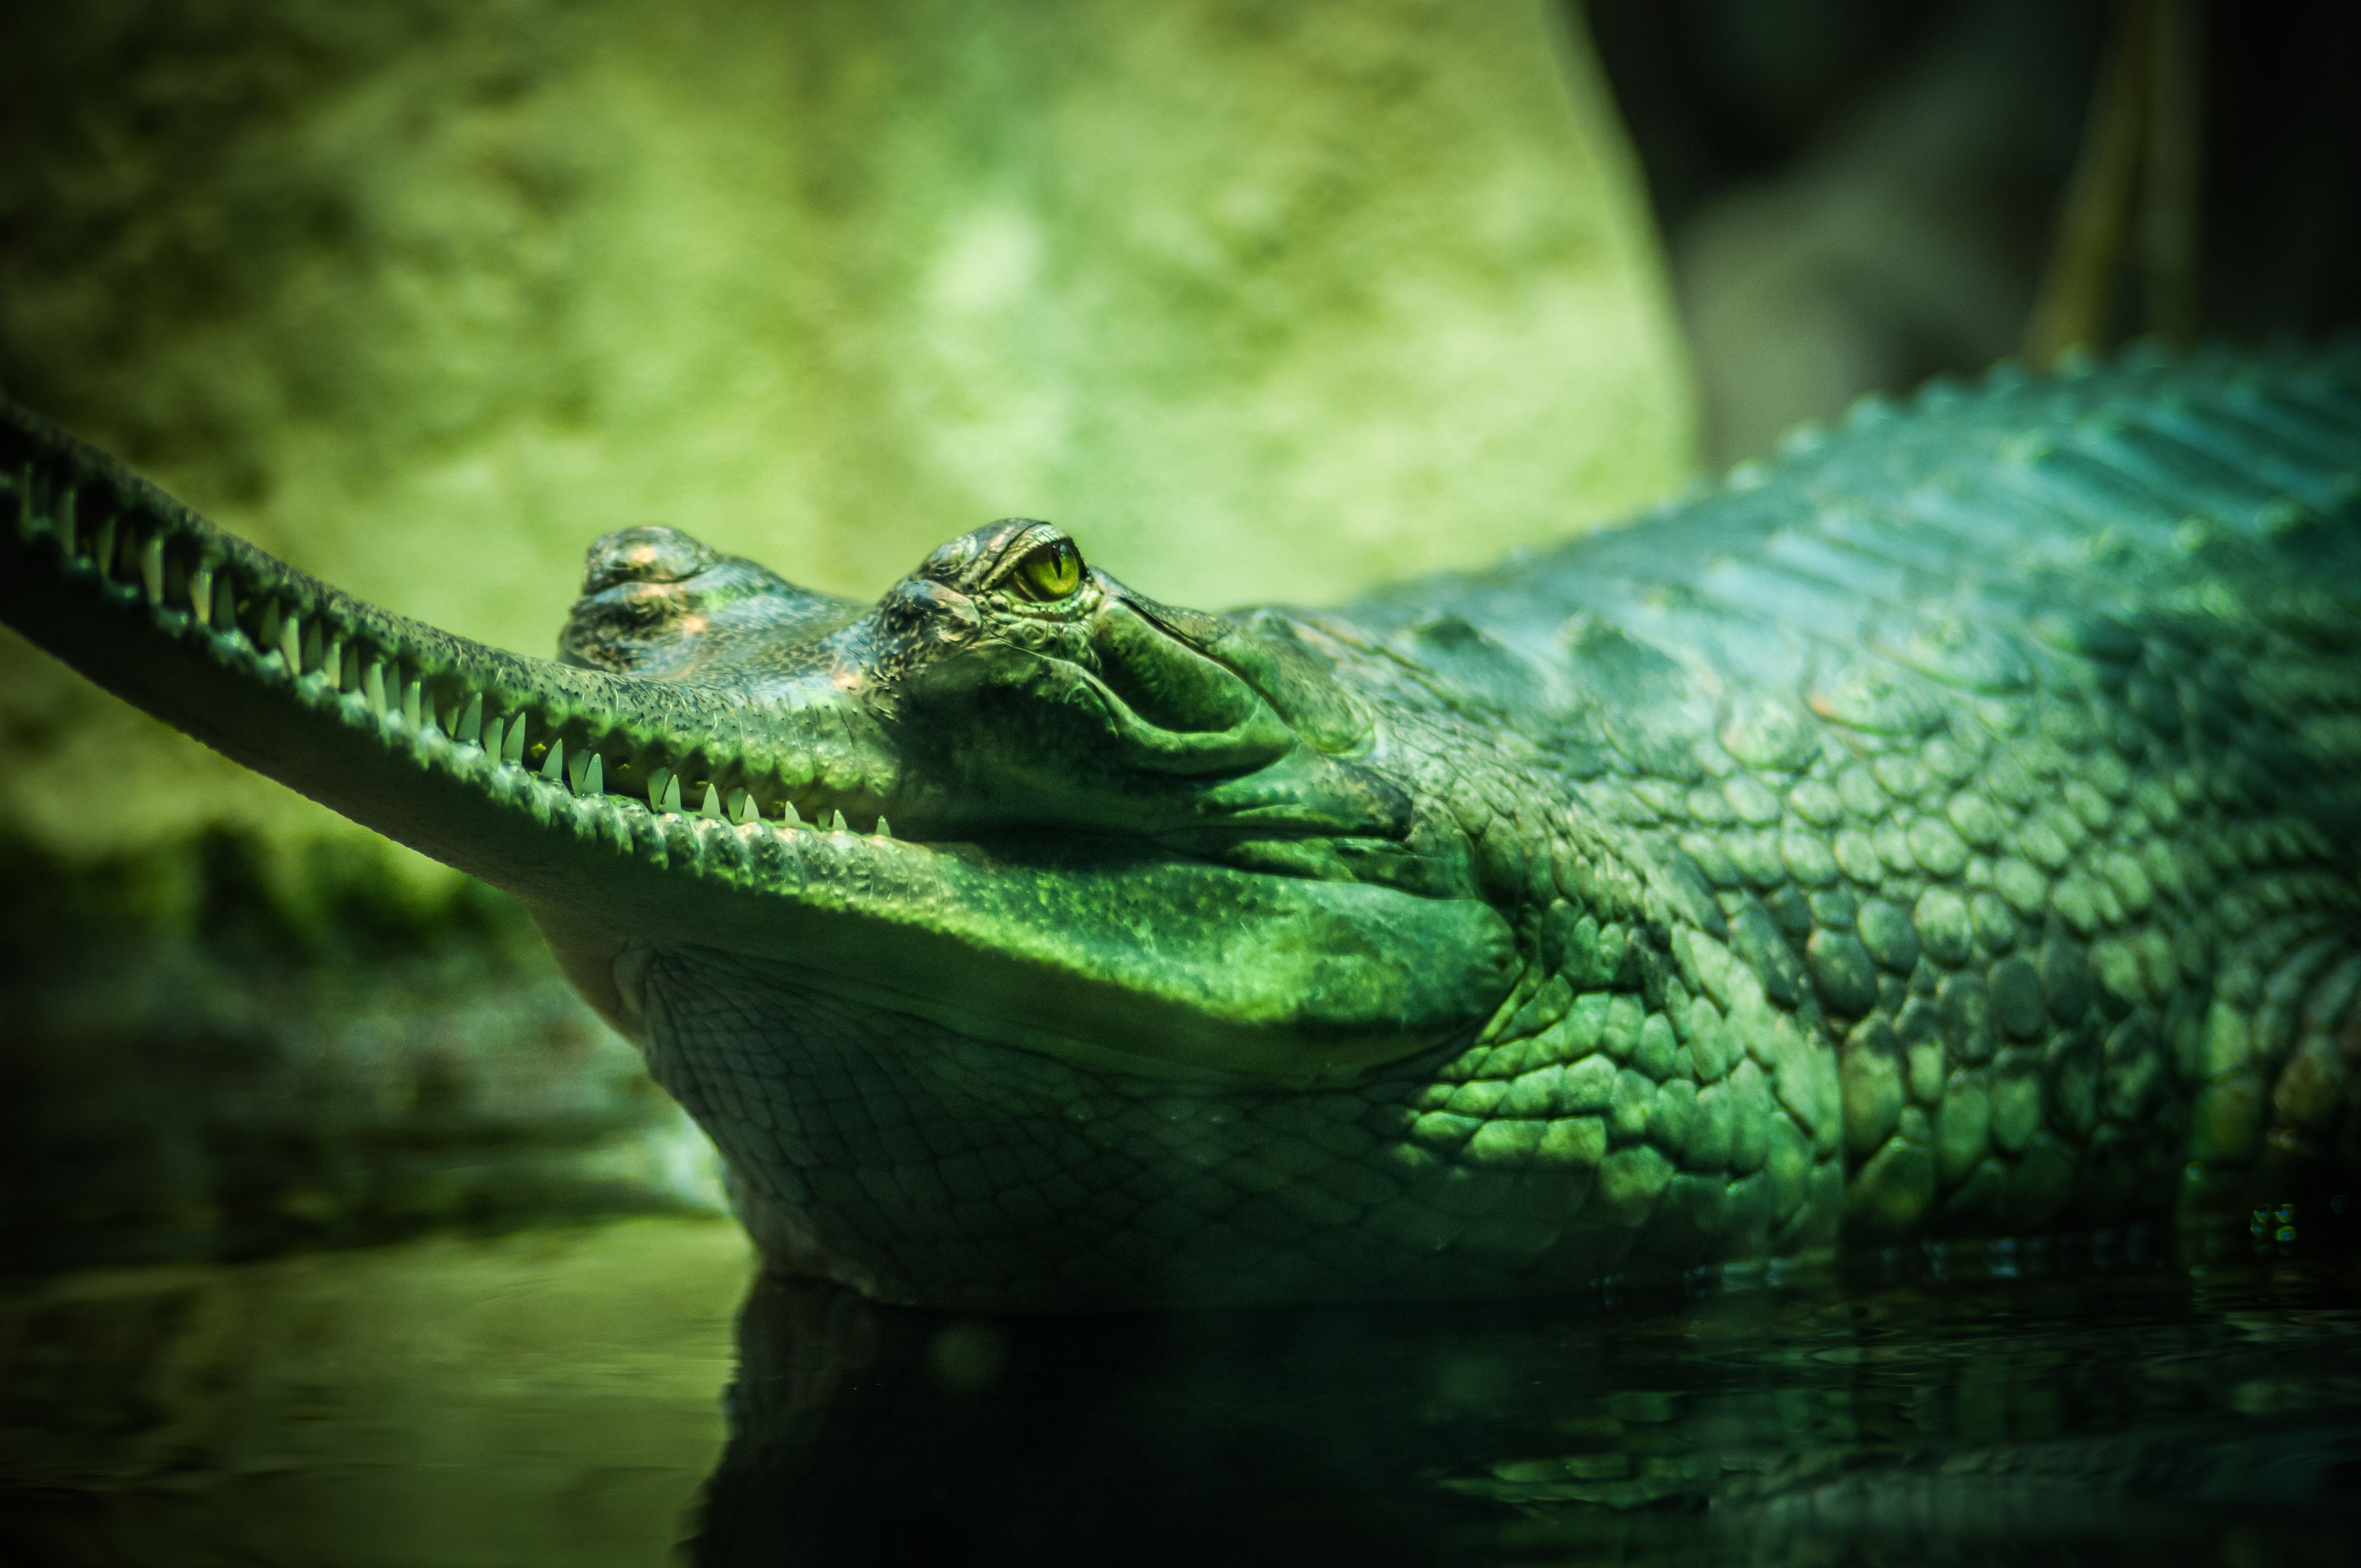 Crocodile Picture. Download Free Image